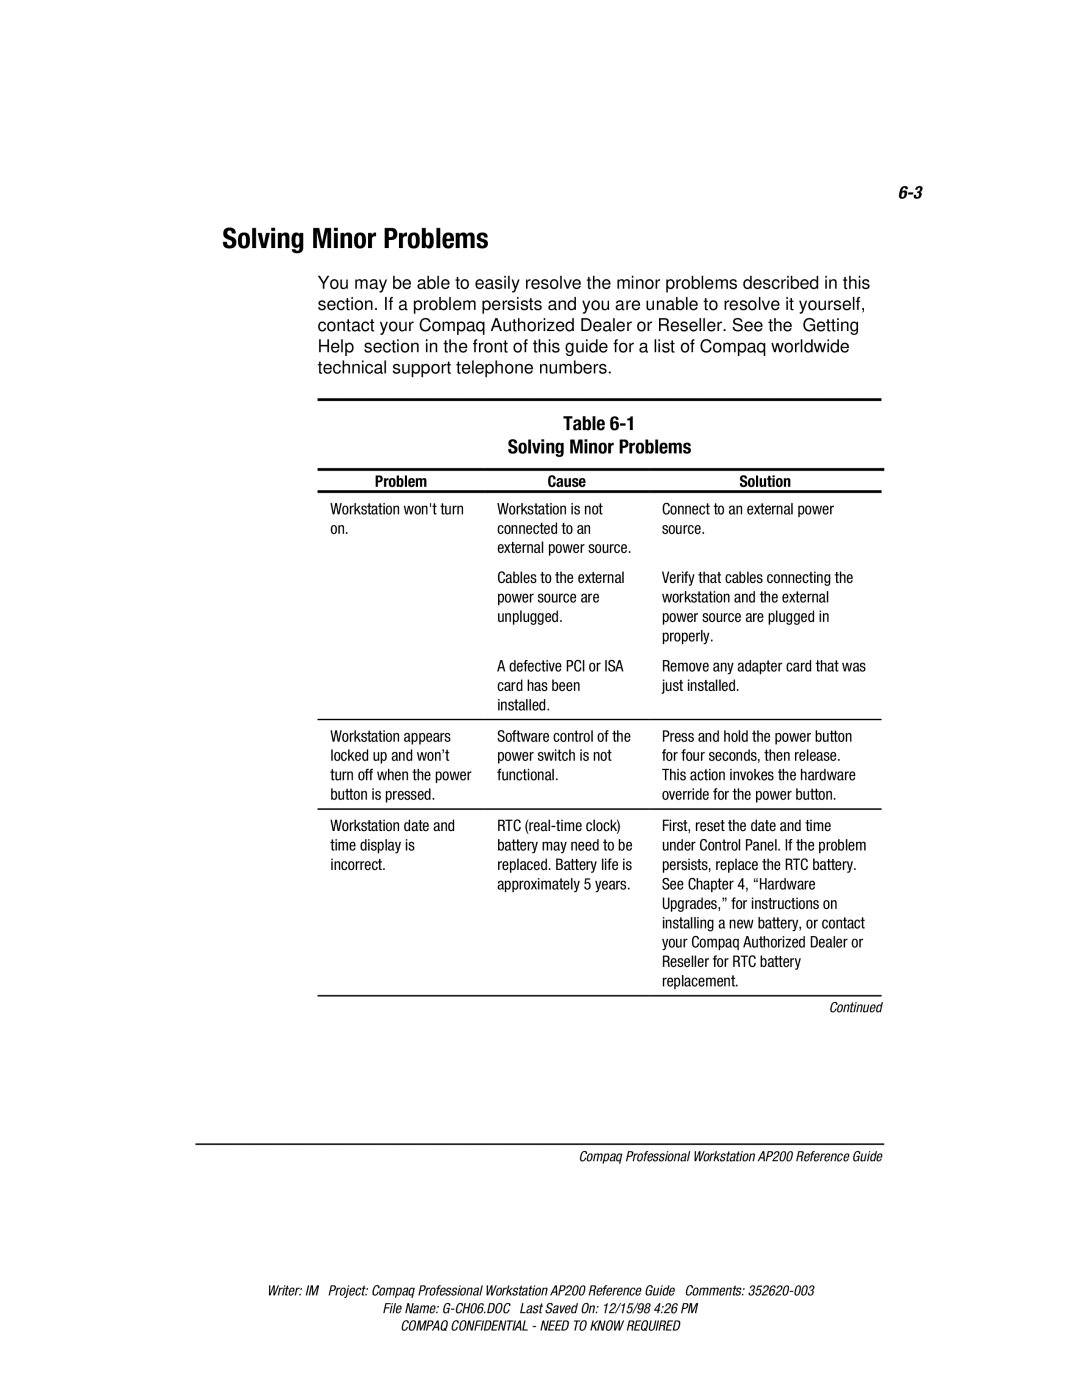 Compaq AP200 manual Solving Minor Problems, Problem Cause Solution 